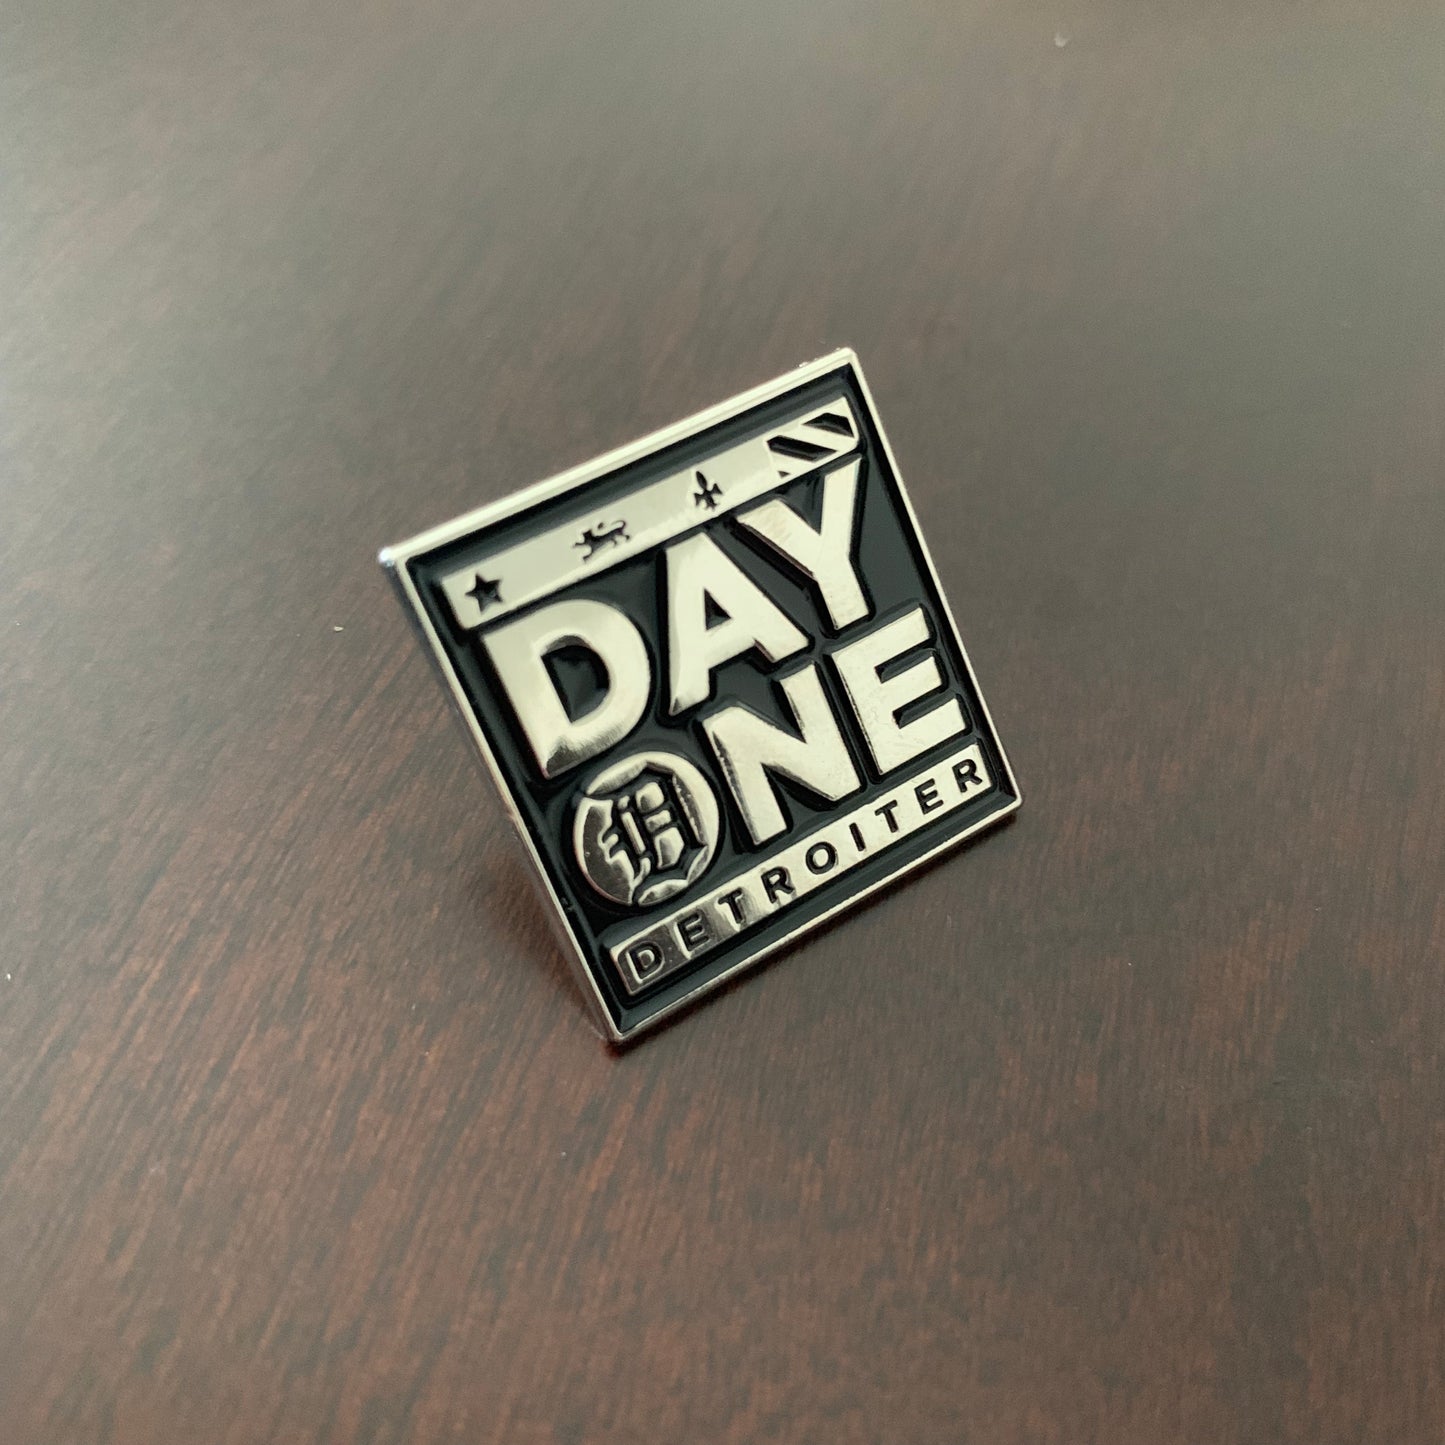 Day One Detroiter 1" Soft Enamel Pin